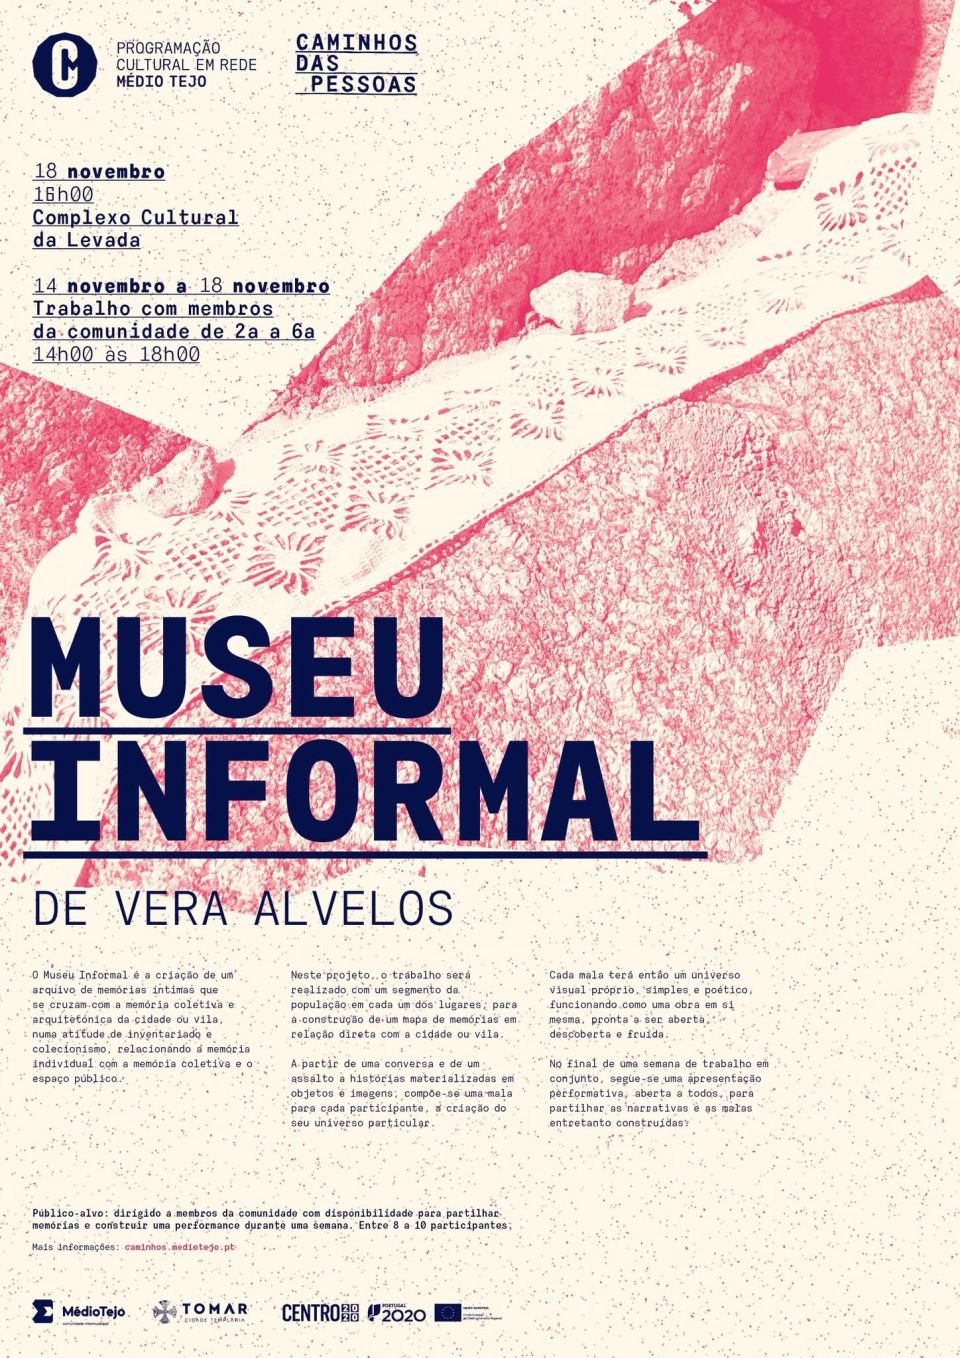 Museu Informal de Vera Alvelos